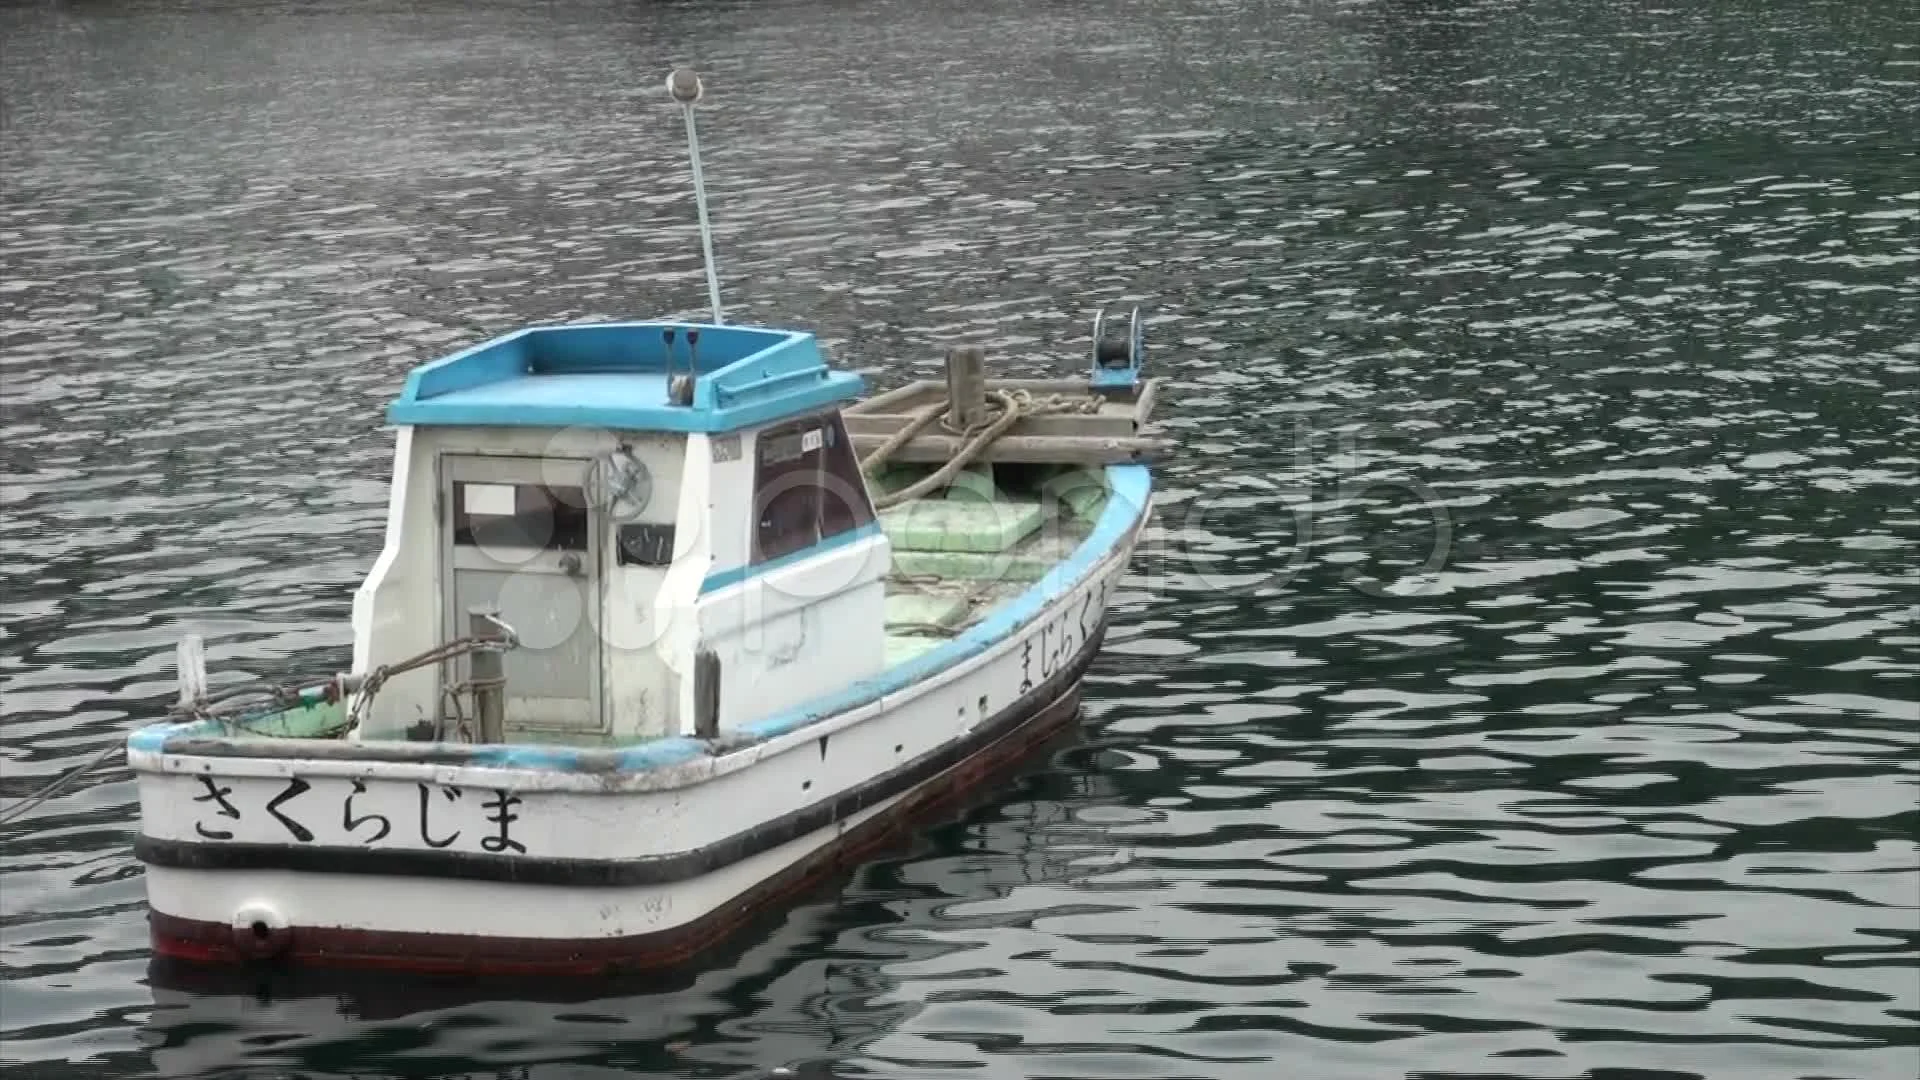 https://images.pond5.com/small-fishing-boat-japanese-harbor-footage-012621948_prevstill.jpeg